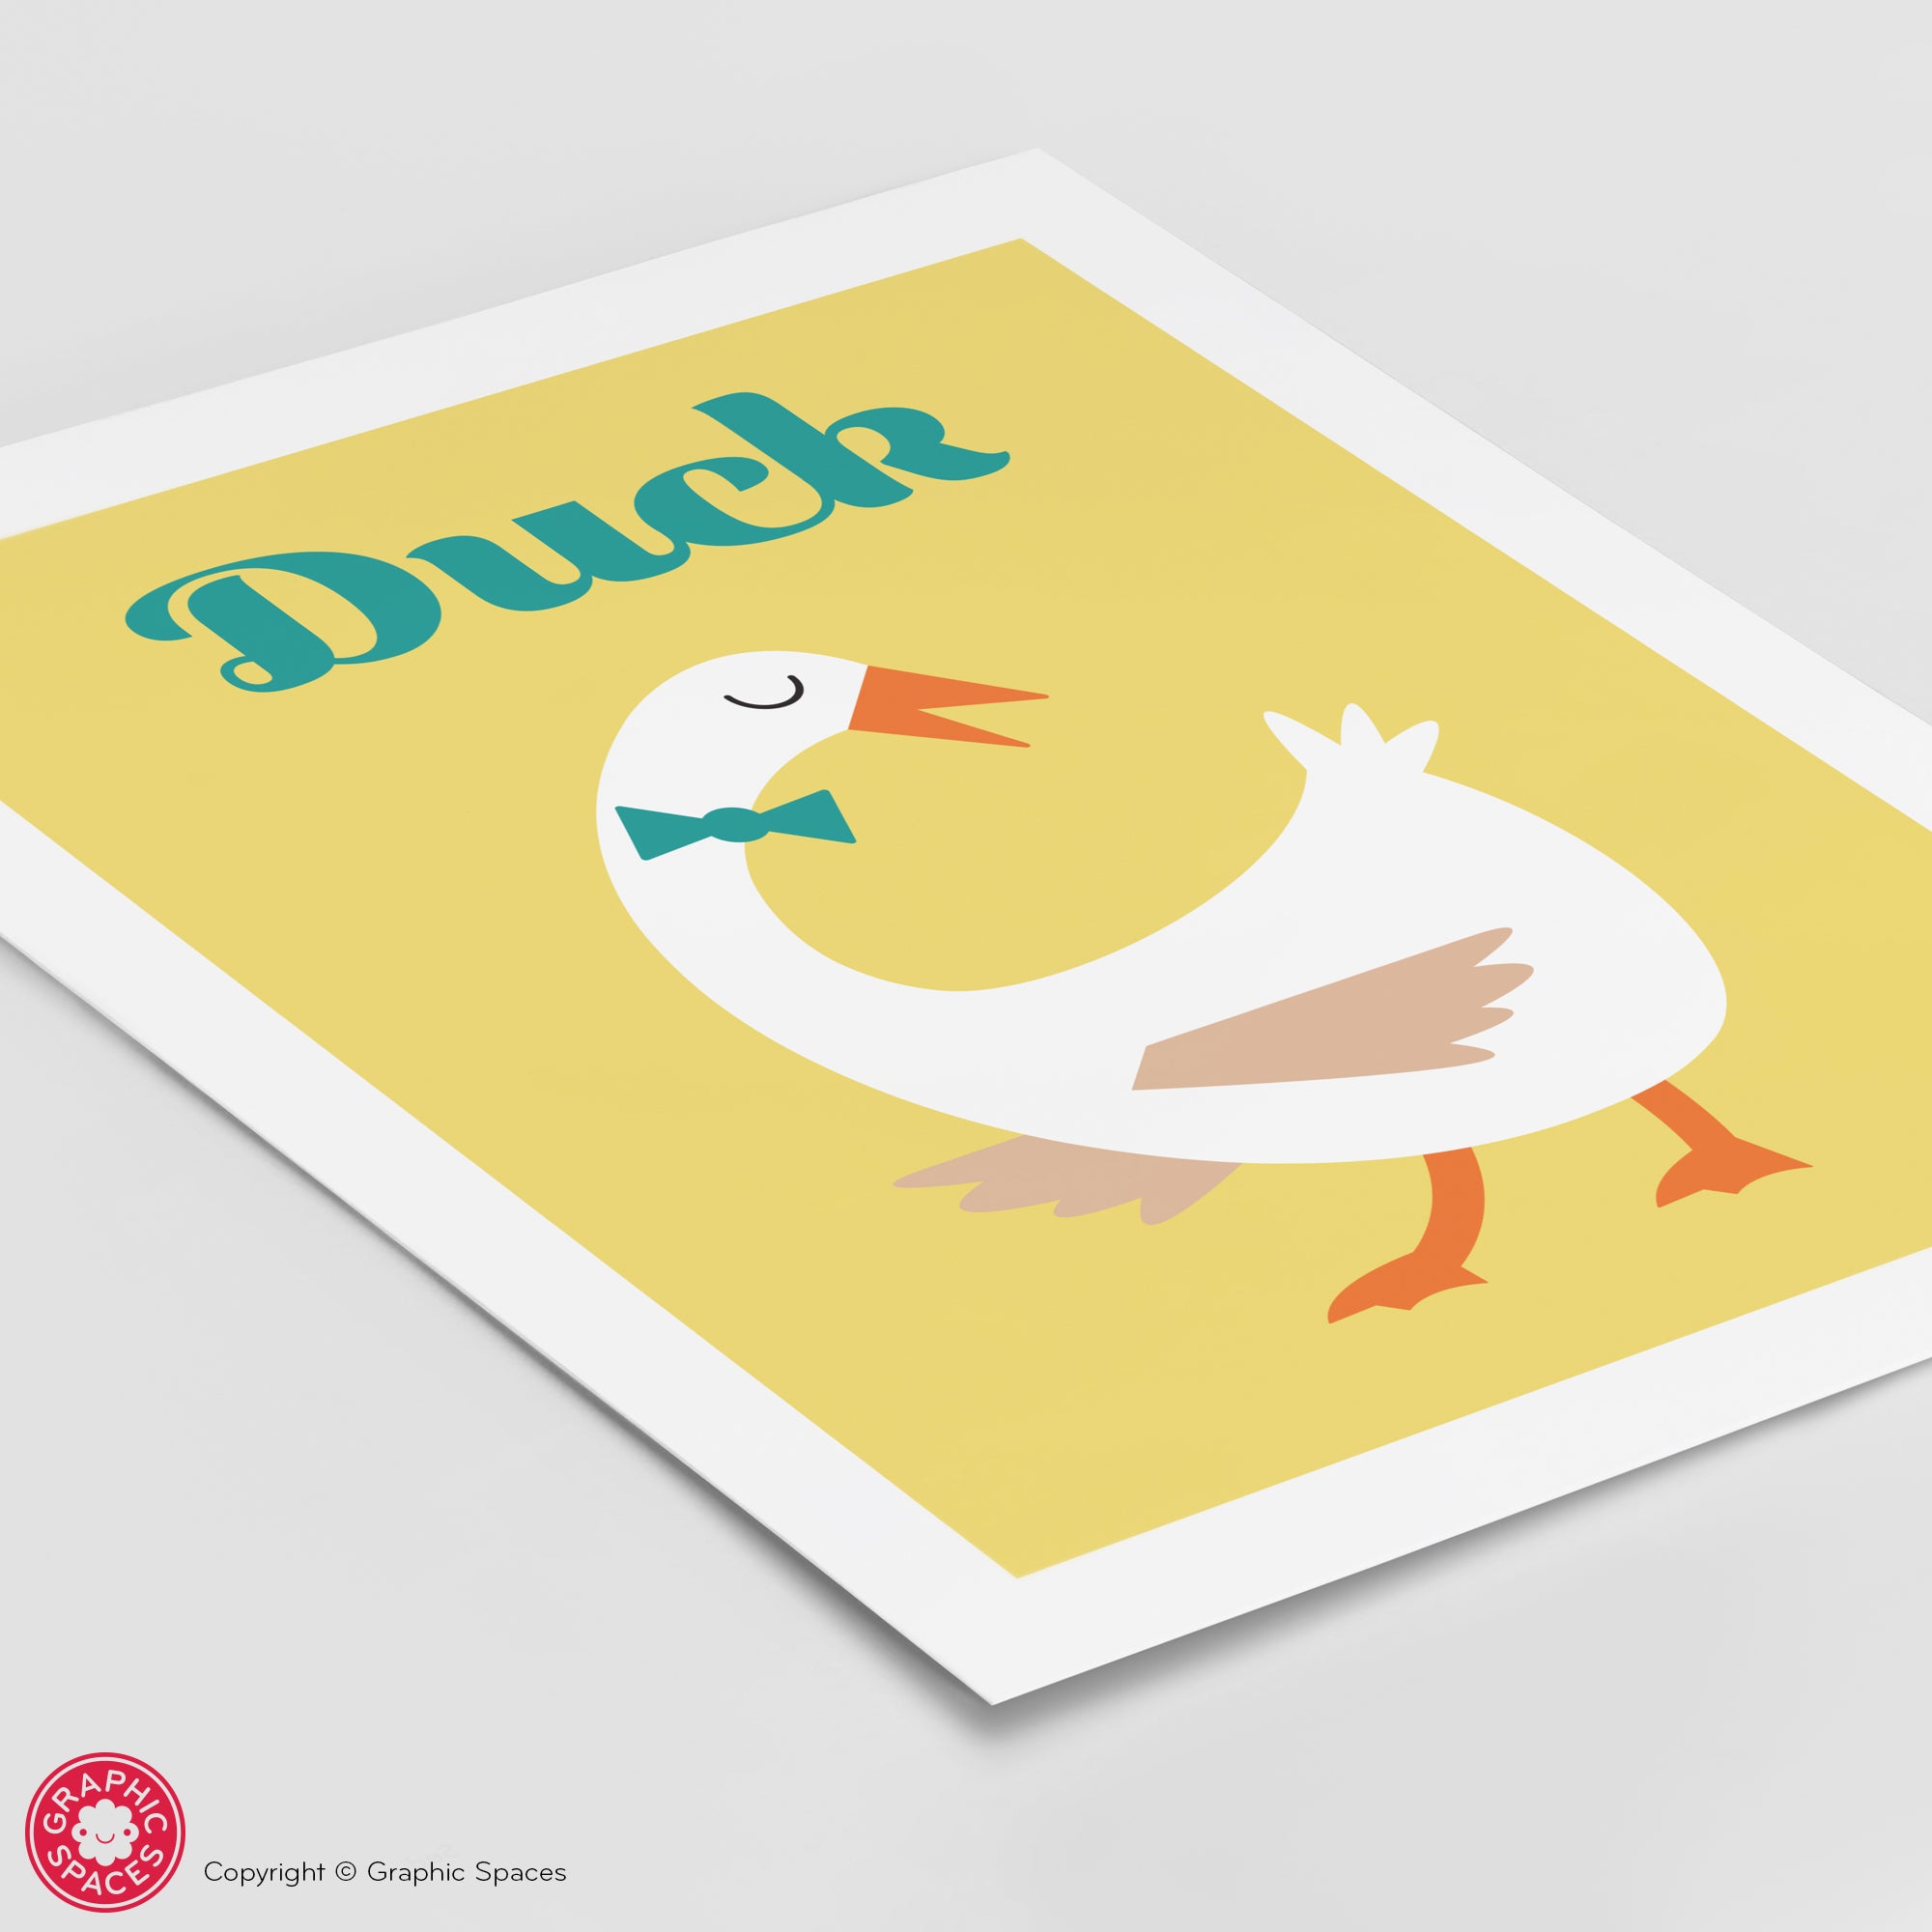 Duck nursery art print.